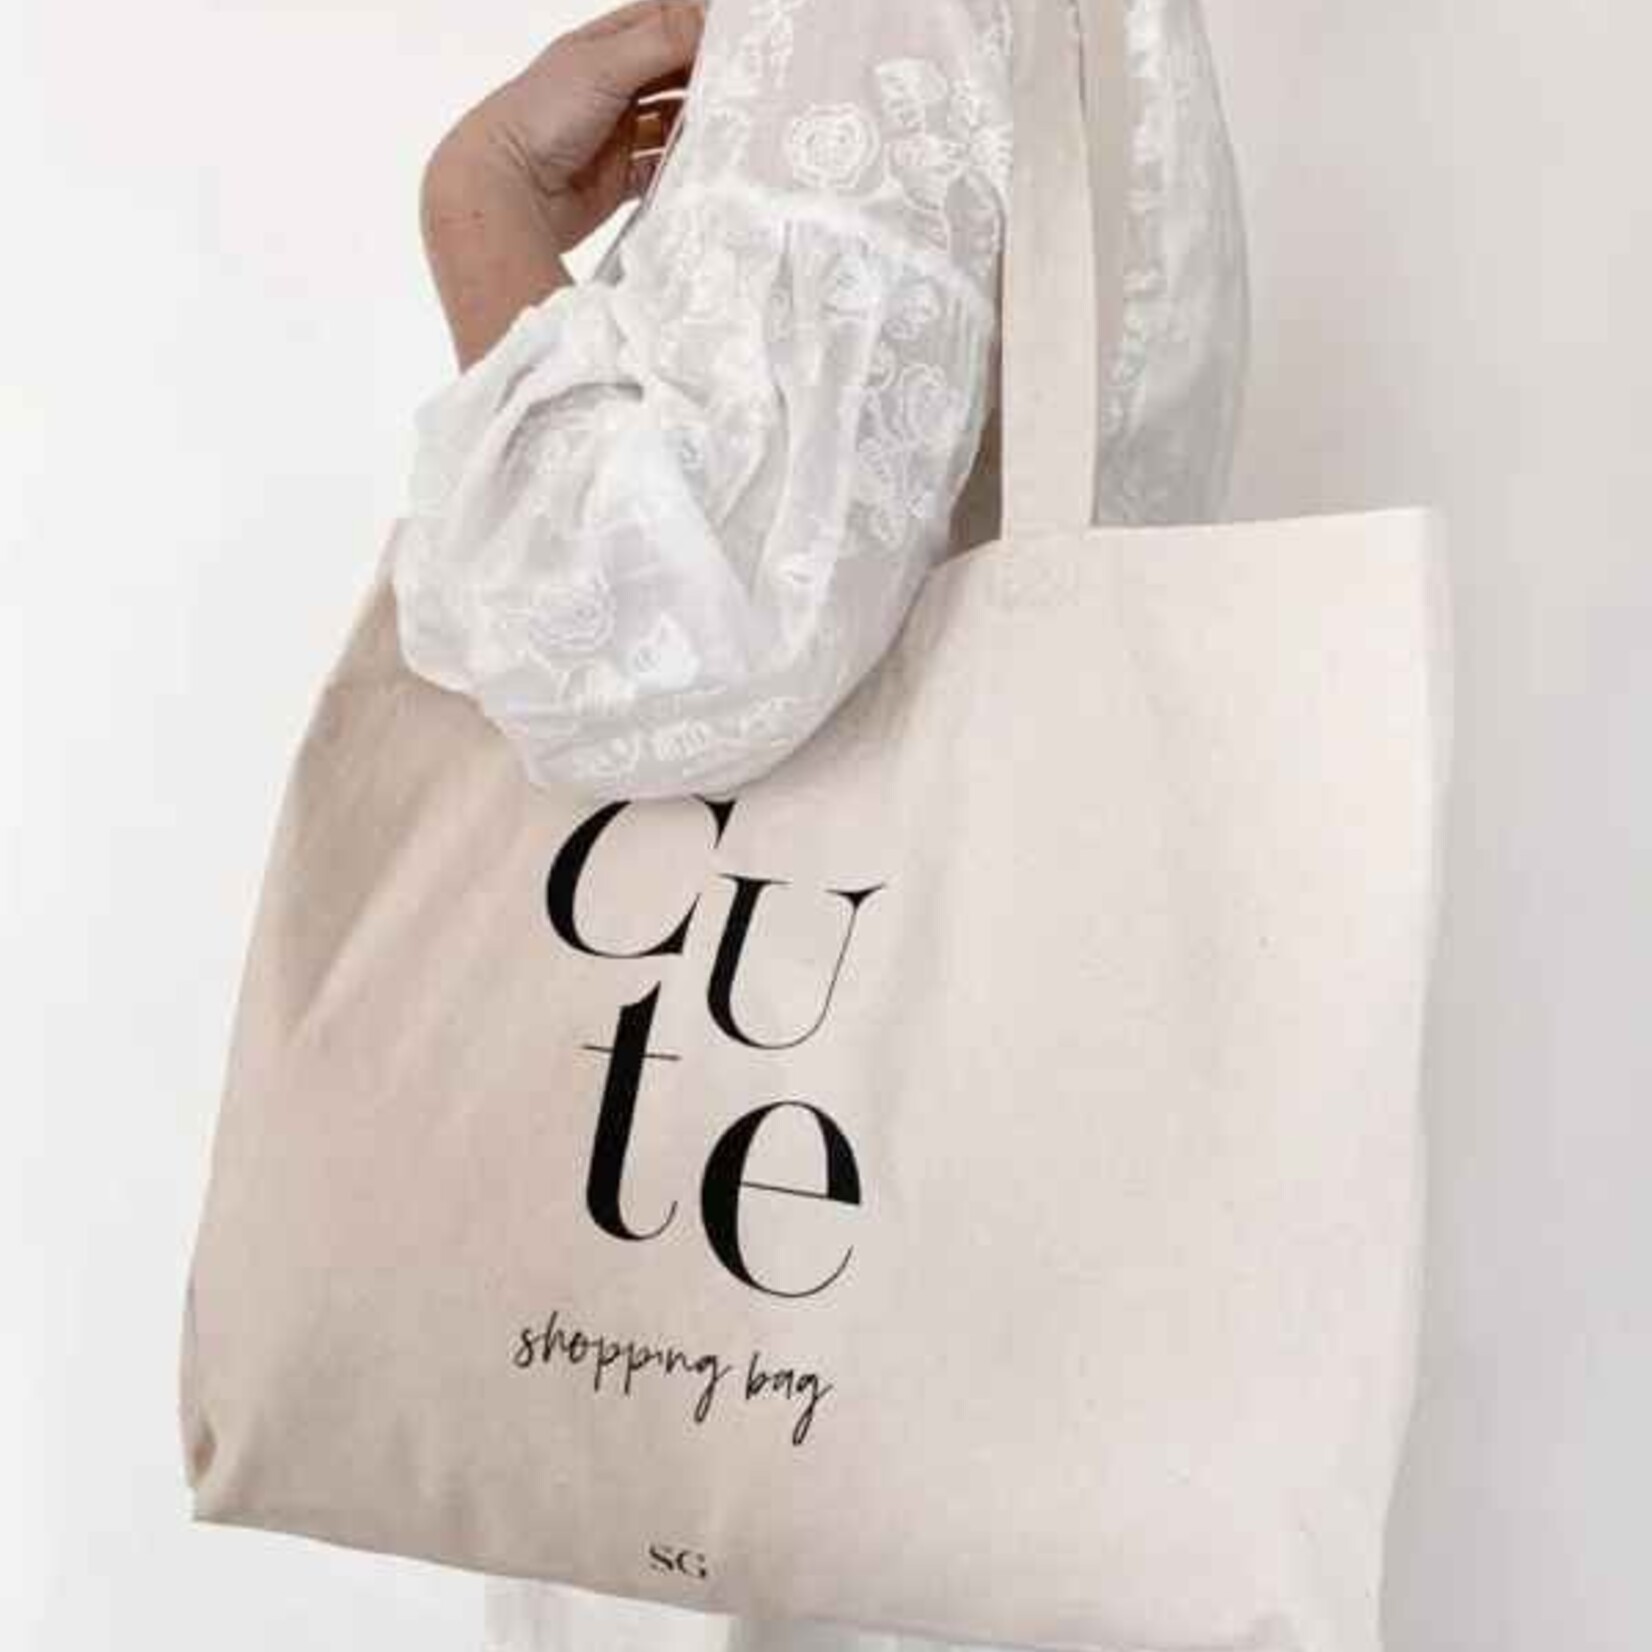 Stationary & Gifts Shopping bag - CUTE - Katoen